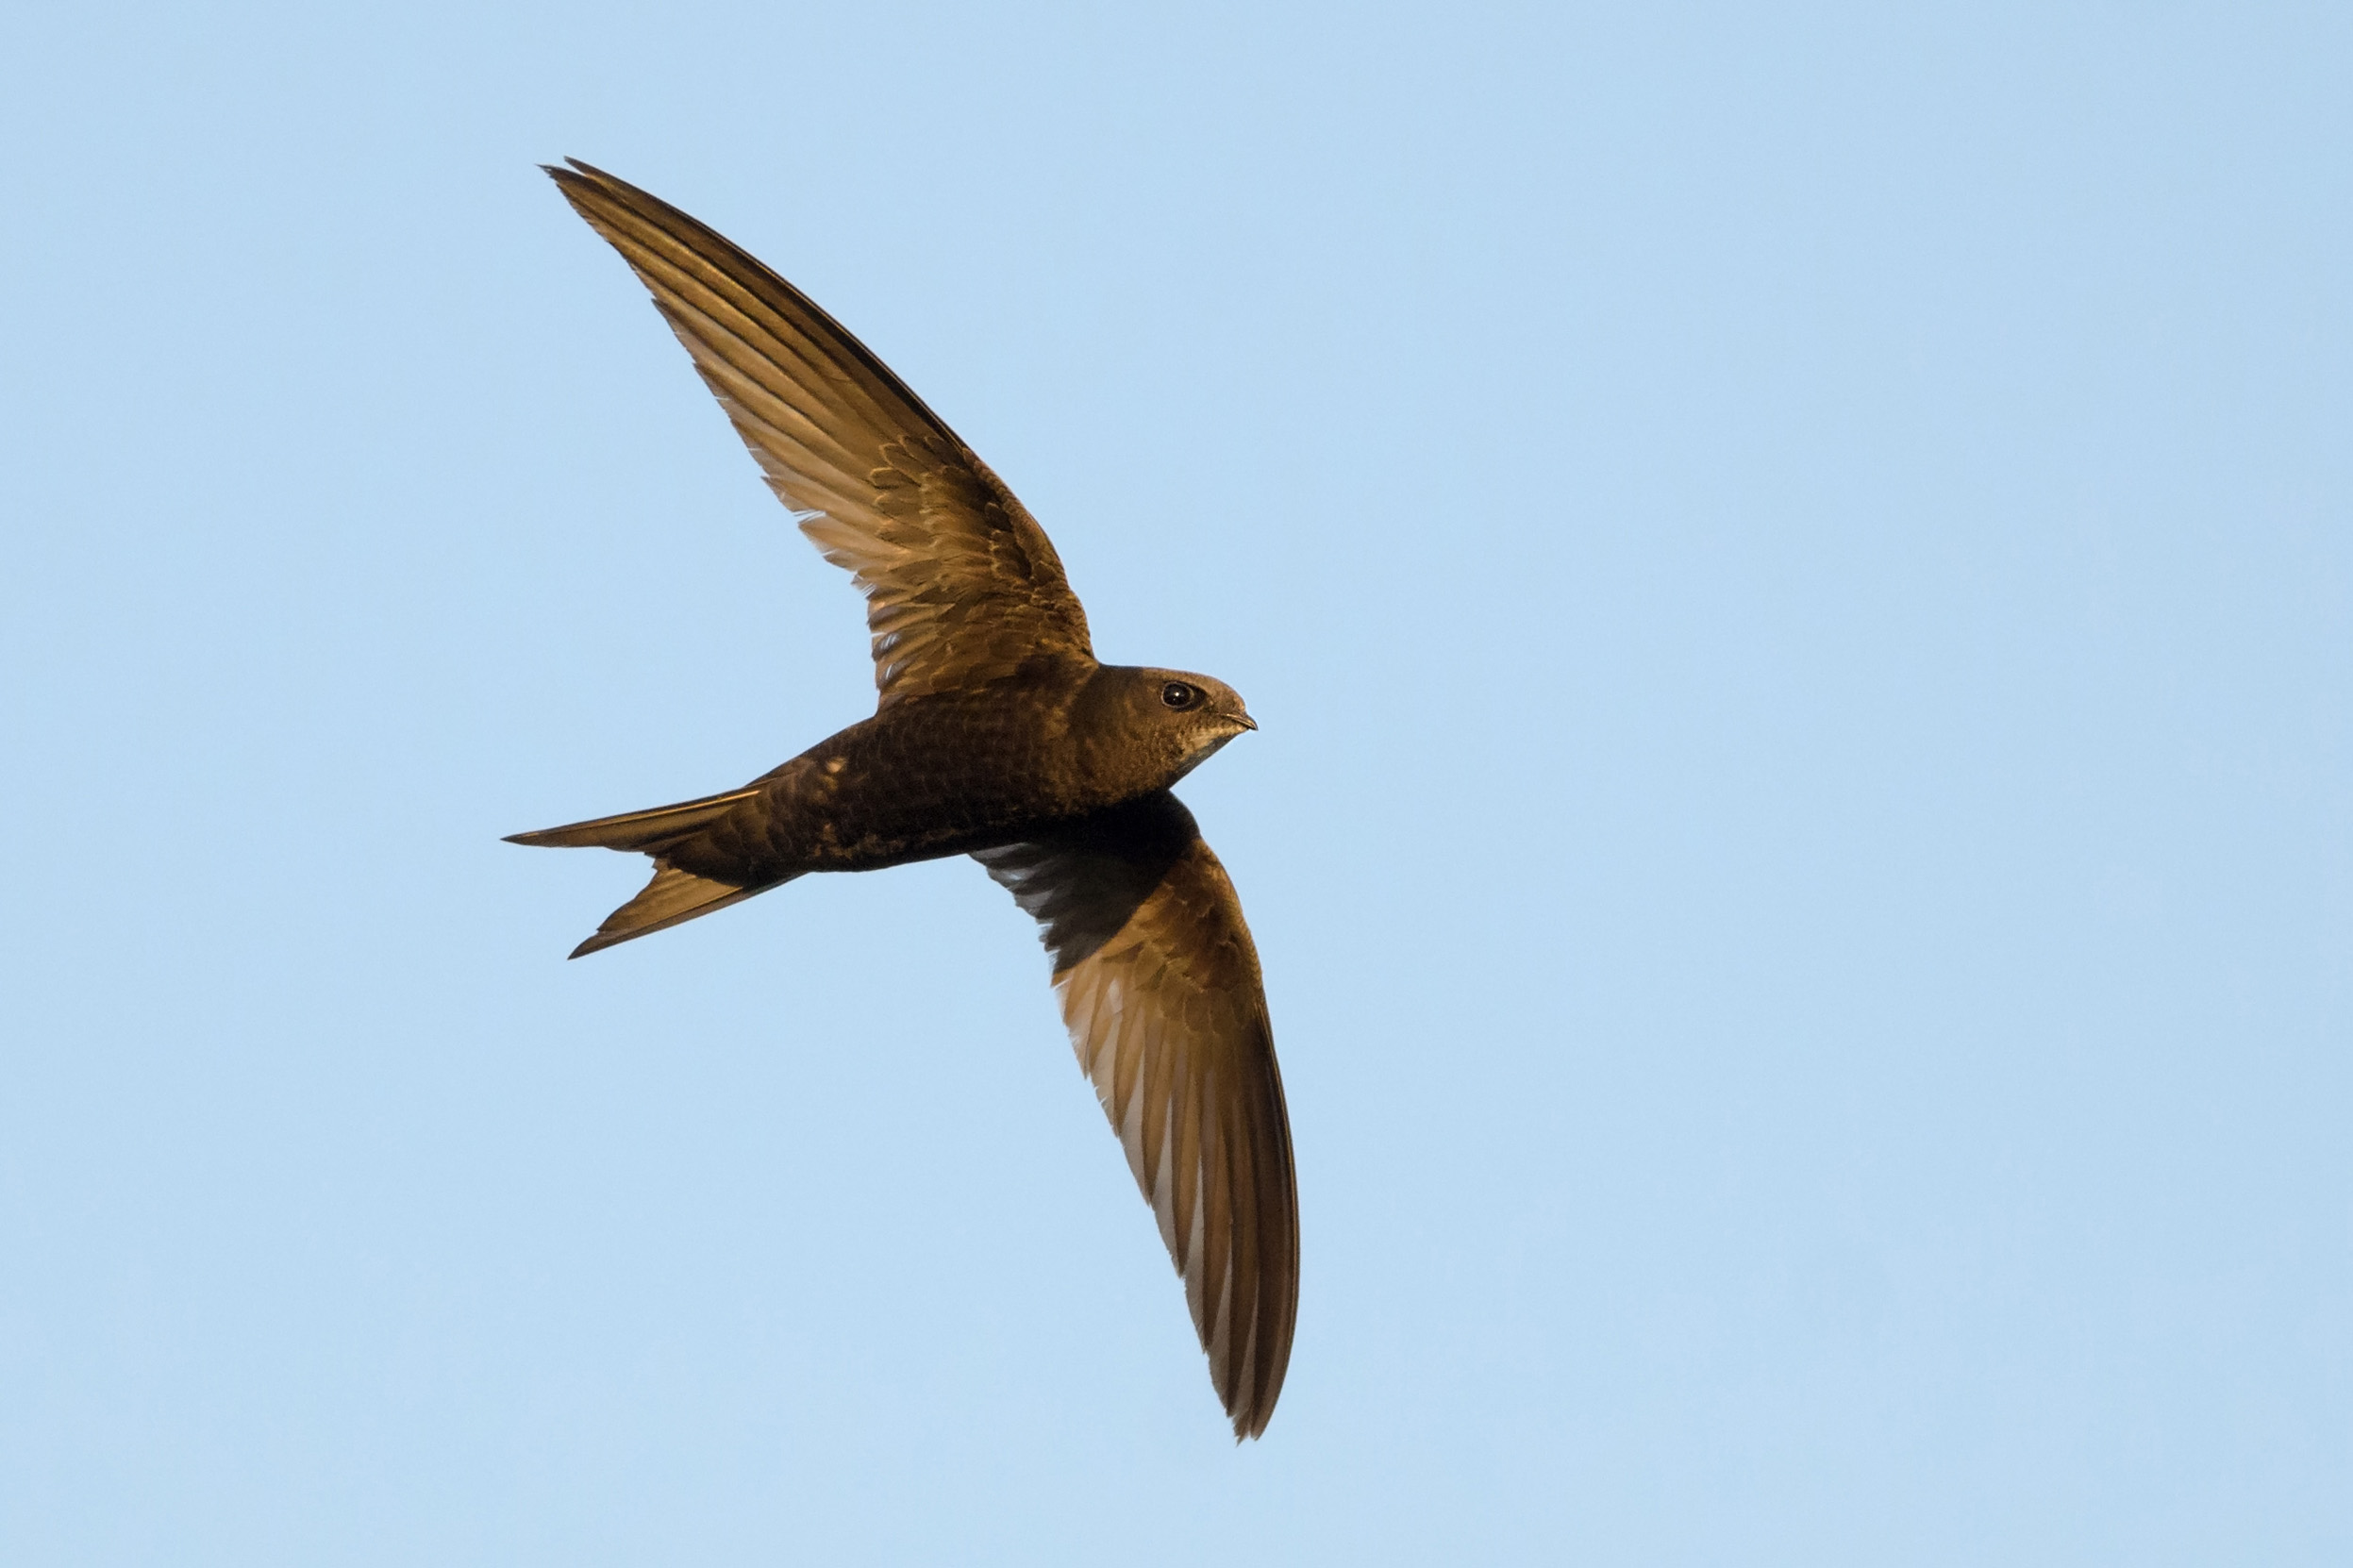 A Swift flying overhead against a blue sky.